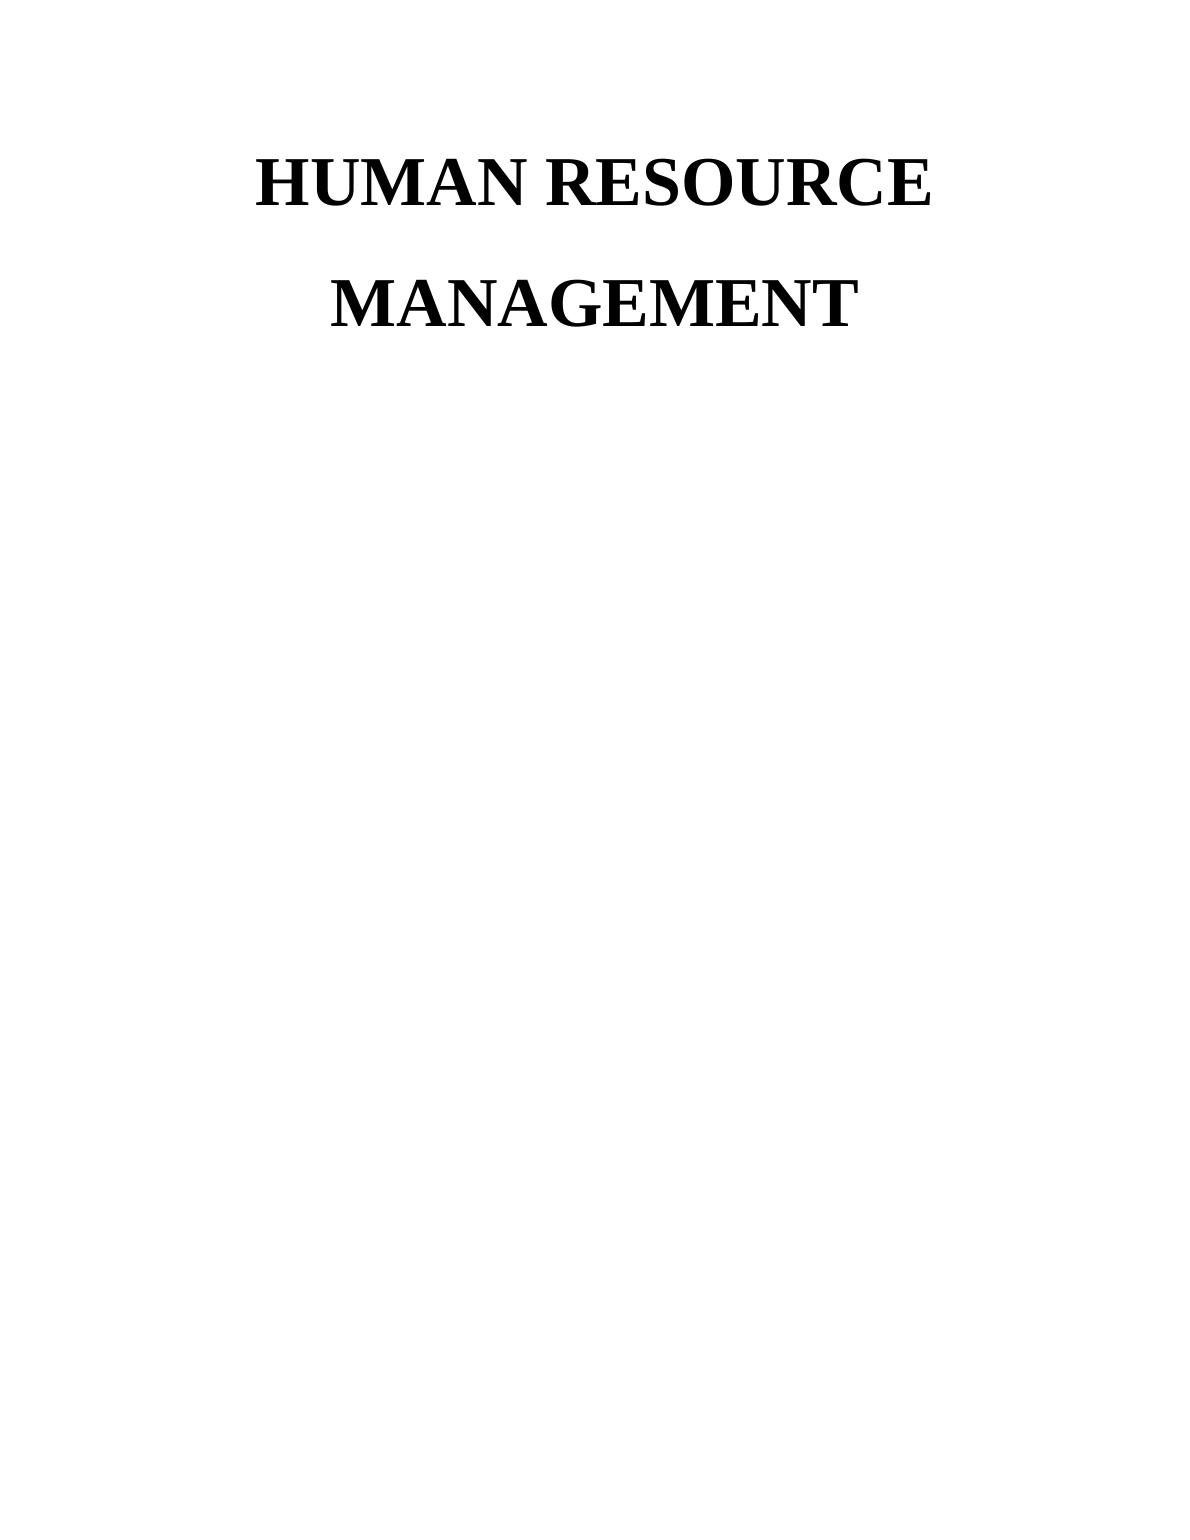 Human Resource Management Limitations_1